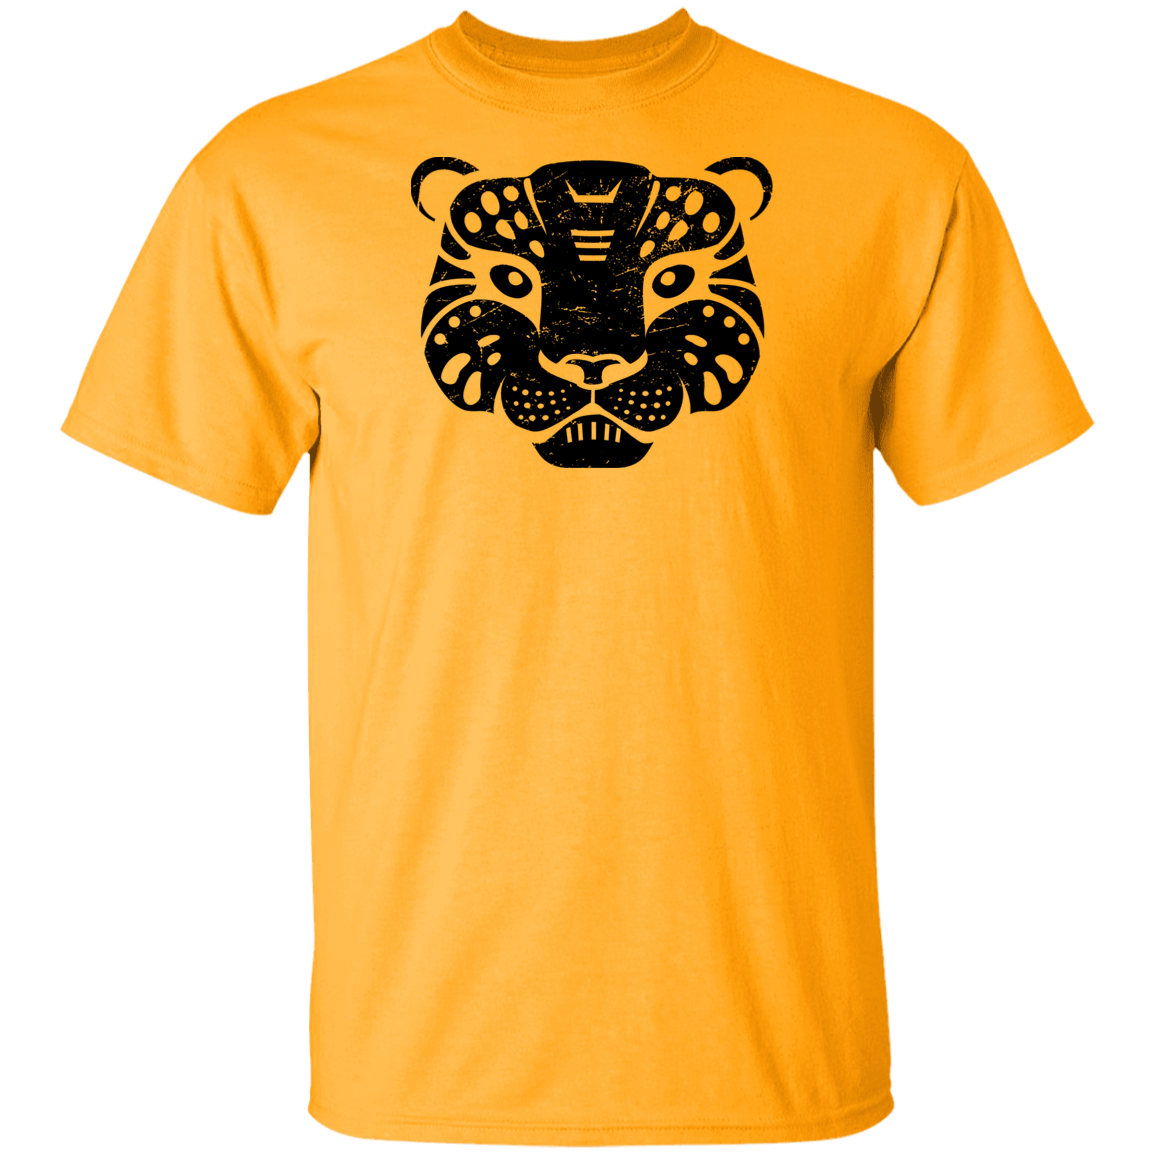 Black Distressed Emblem T-Shirt for Kids (Snow Leopard/Denali)